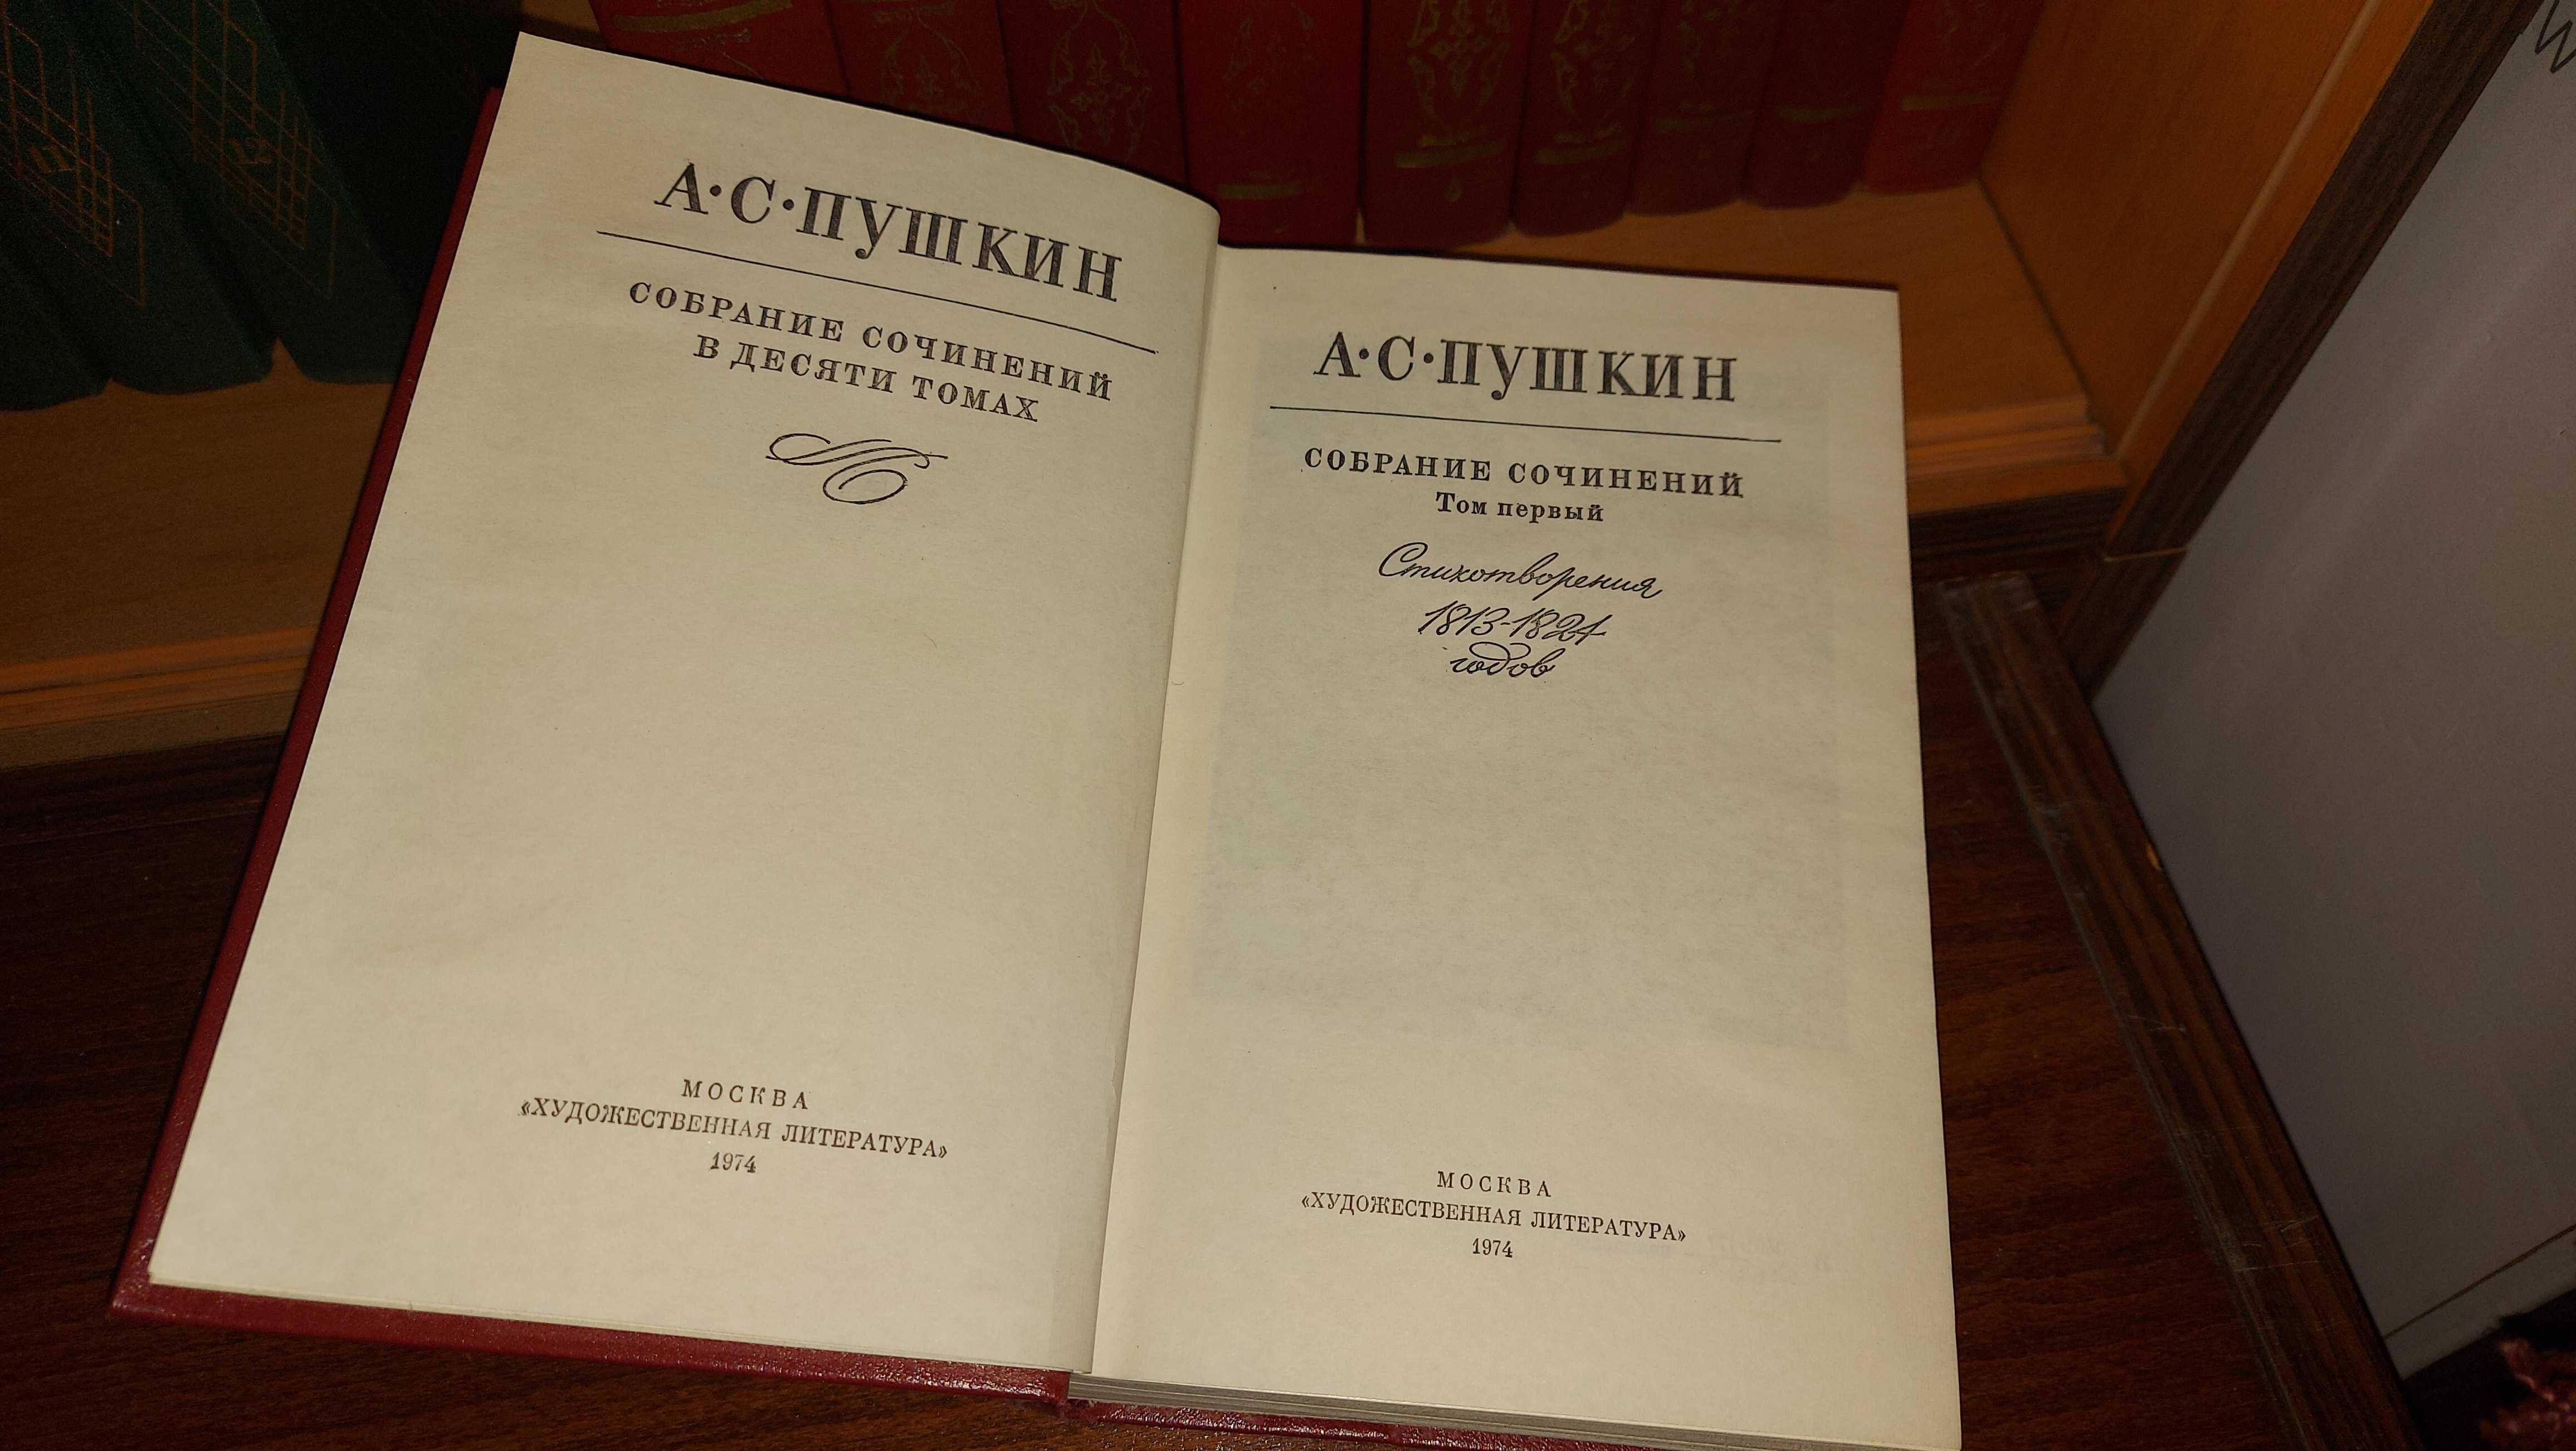 А.С. Пушкин - Собрание сочинений в 10 томах